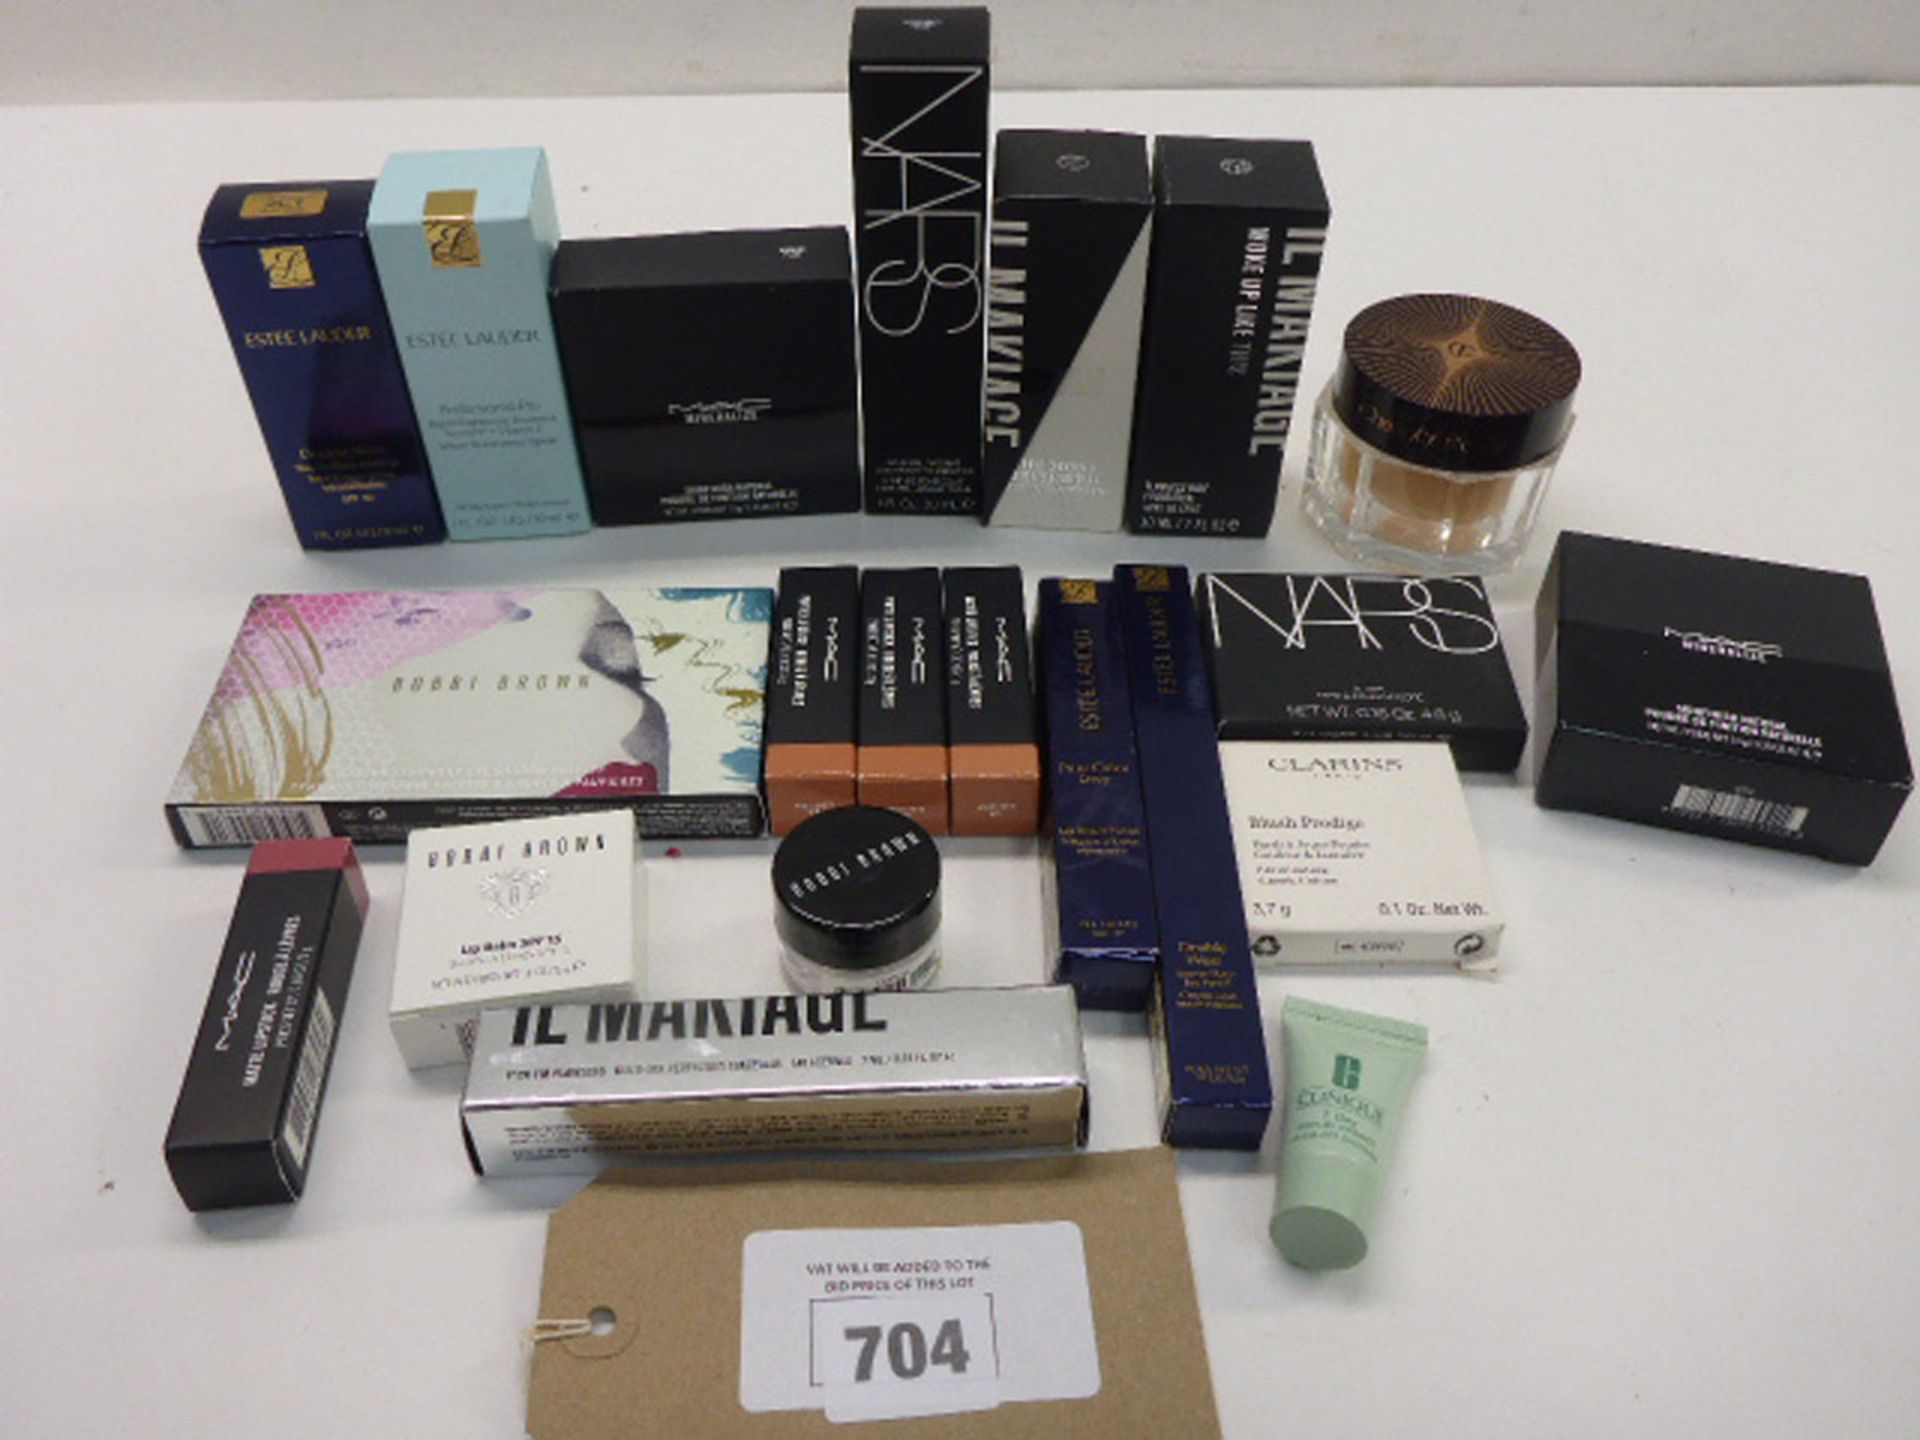 Selection of branded cosmetics including Bobbi Brown, Charlotte Tilbury, Estee Lauder, NARS, MAC, Il